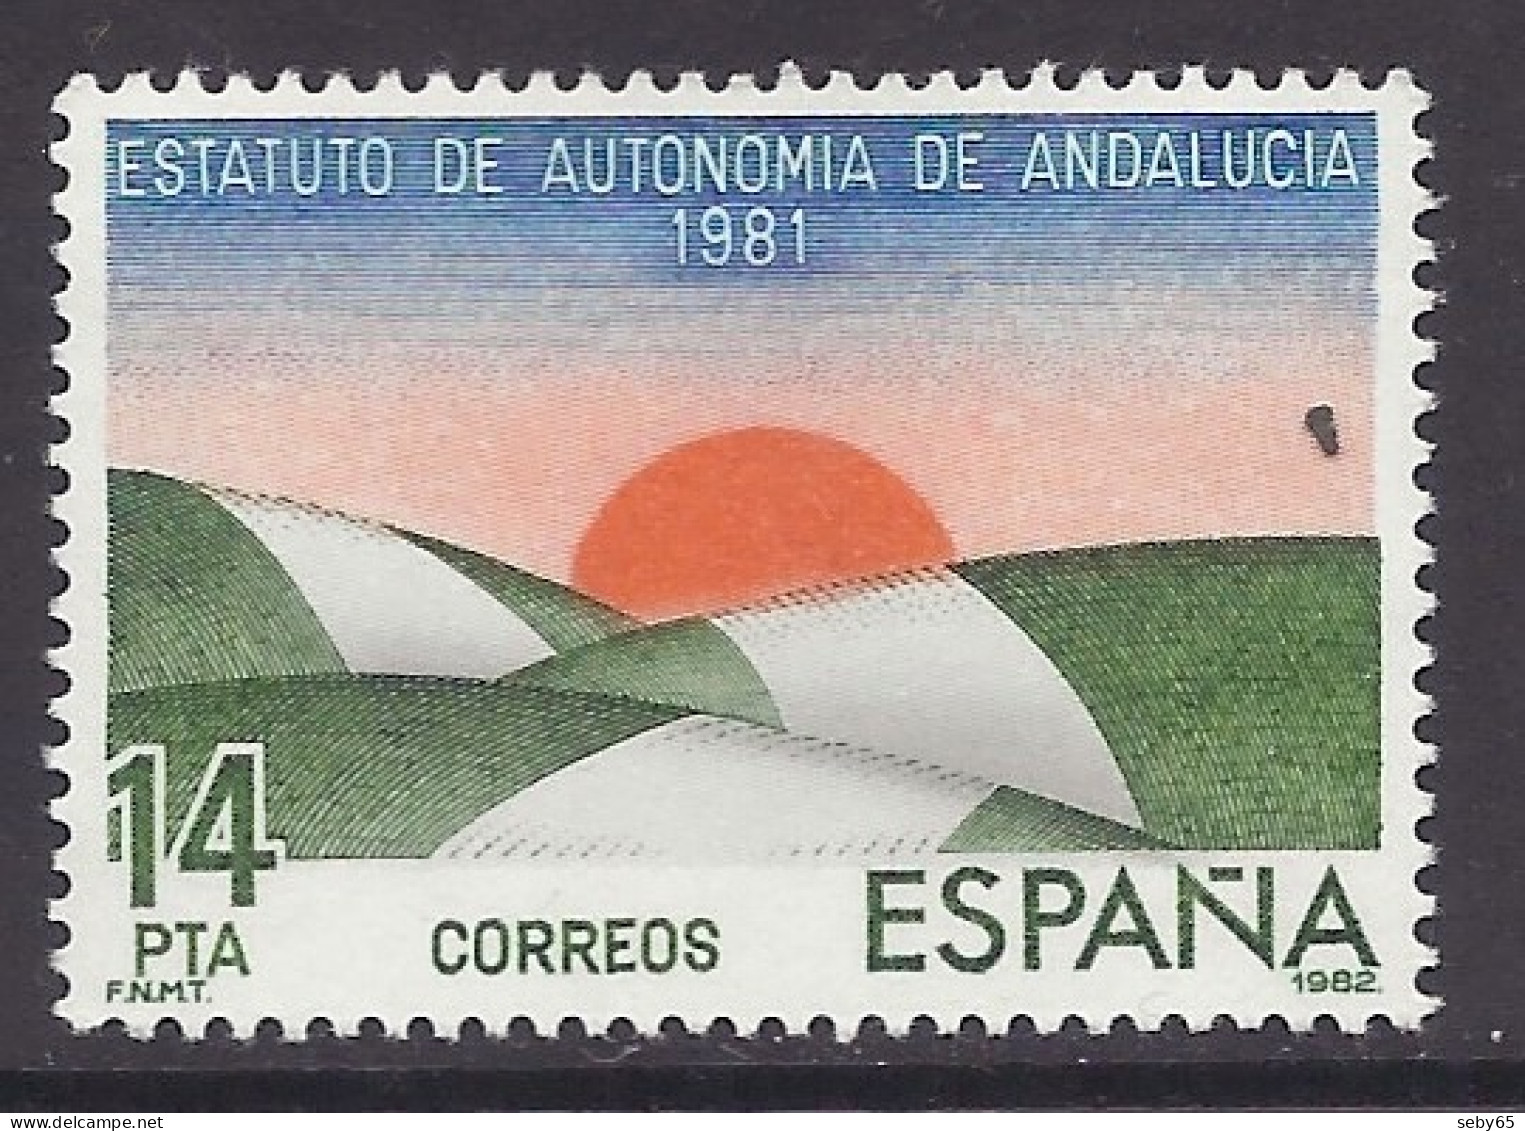 Spain 1983 - Estatutos De Autonomías, Region De Andalucia, Andalusia, Sun Sunrise, Emblem - MNH - Unused Stamps